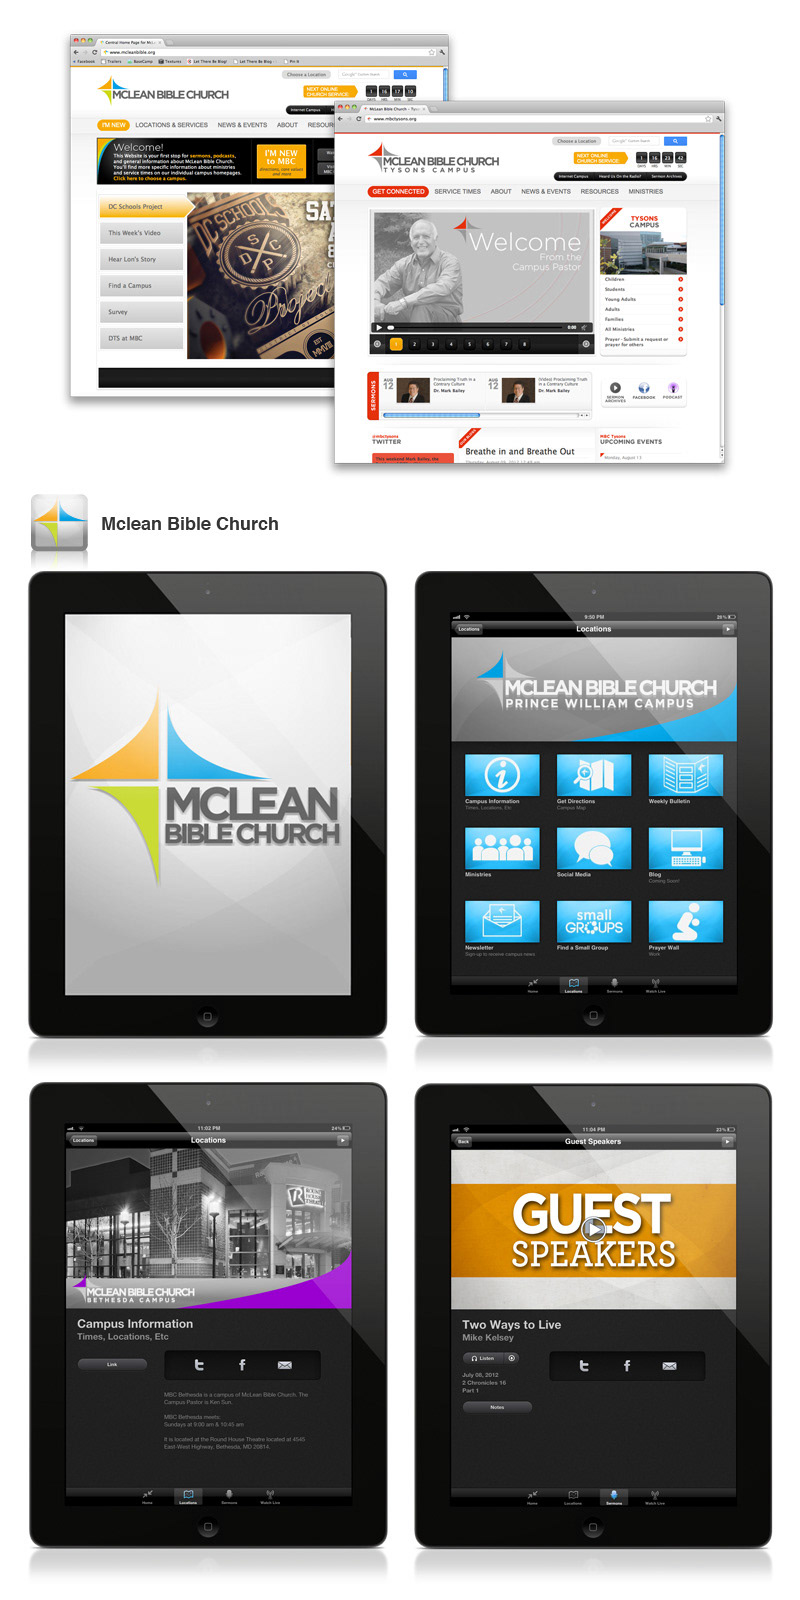 mbc mclean bible church app logo sub-logos campus washington dc metro iPad